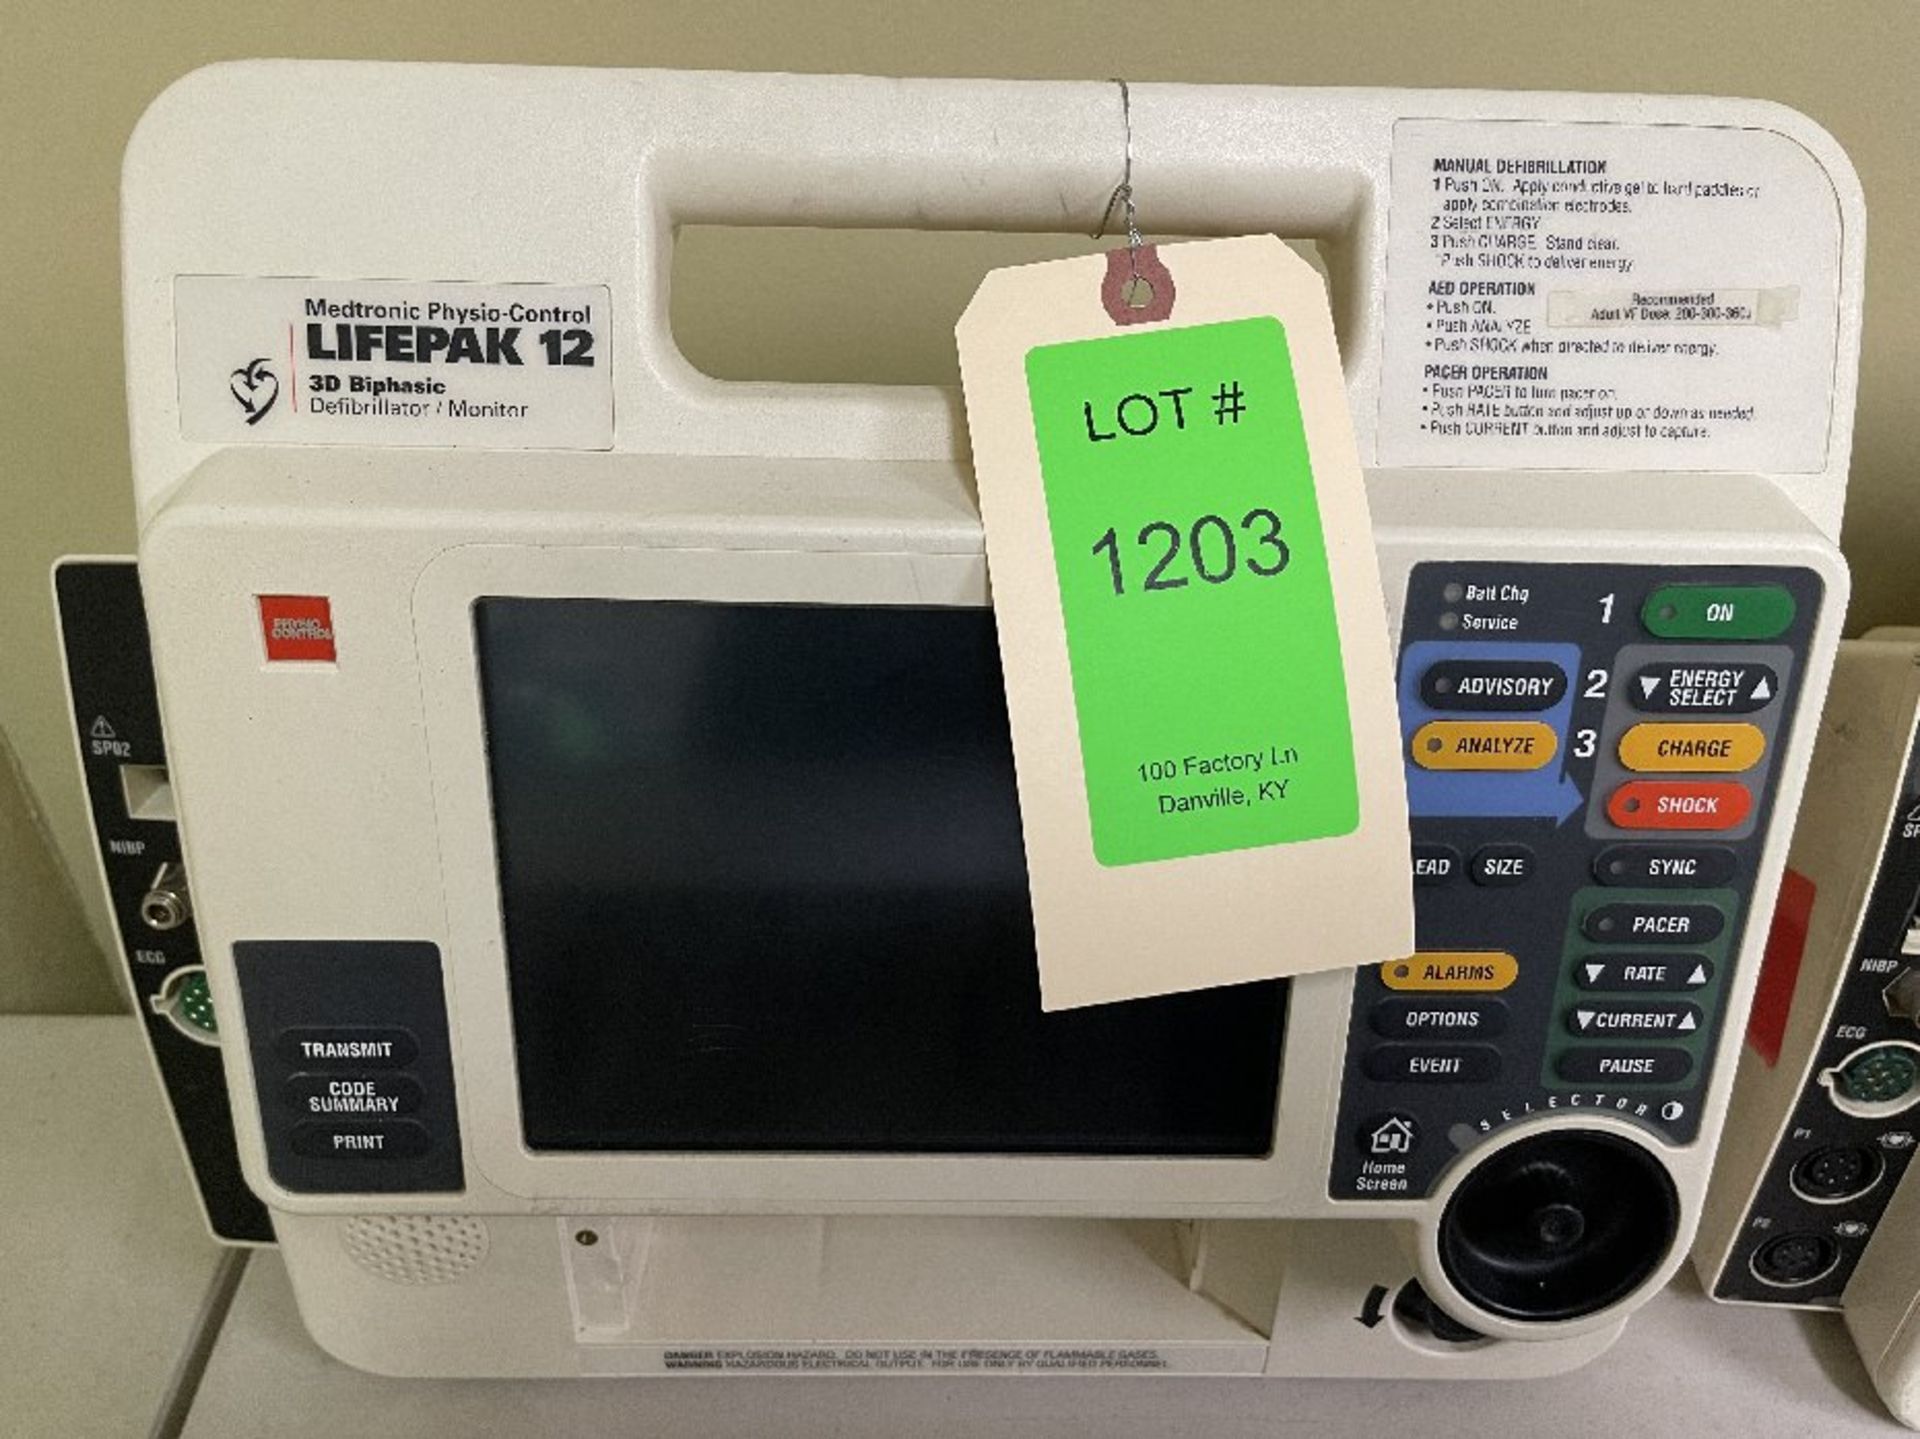 Medtronic Physio-Control LifePak 12 Biphasic Defibrillator